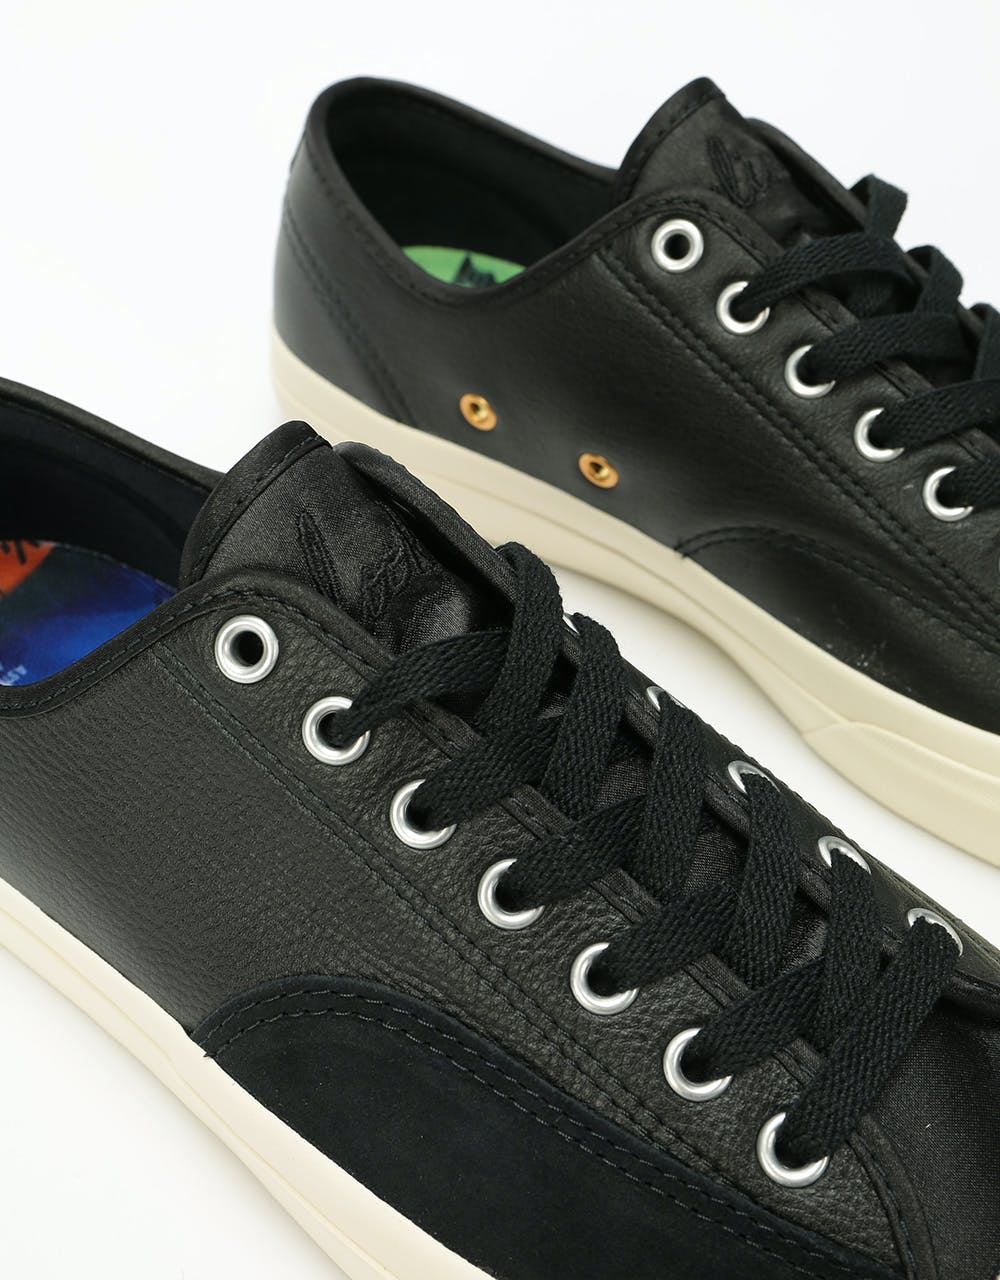 Converse x Jenkem Jack Purcell Pro Ox Skate Shoes - Black/Egret/Black